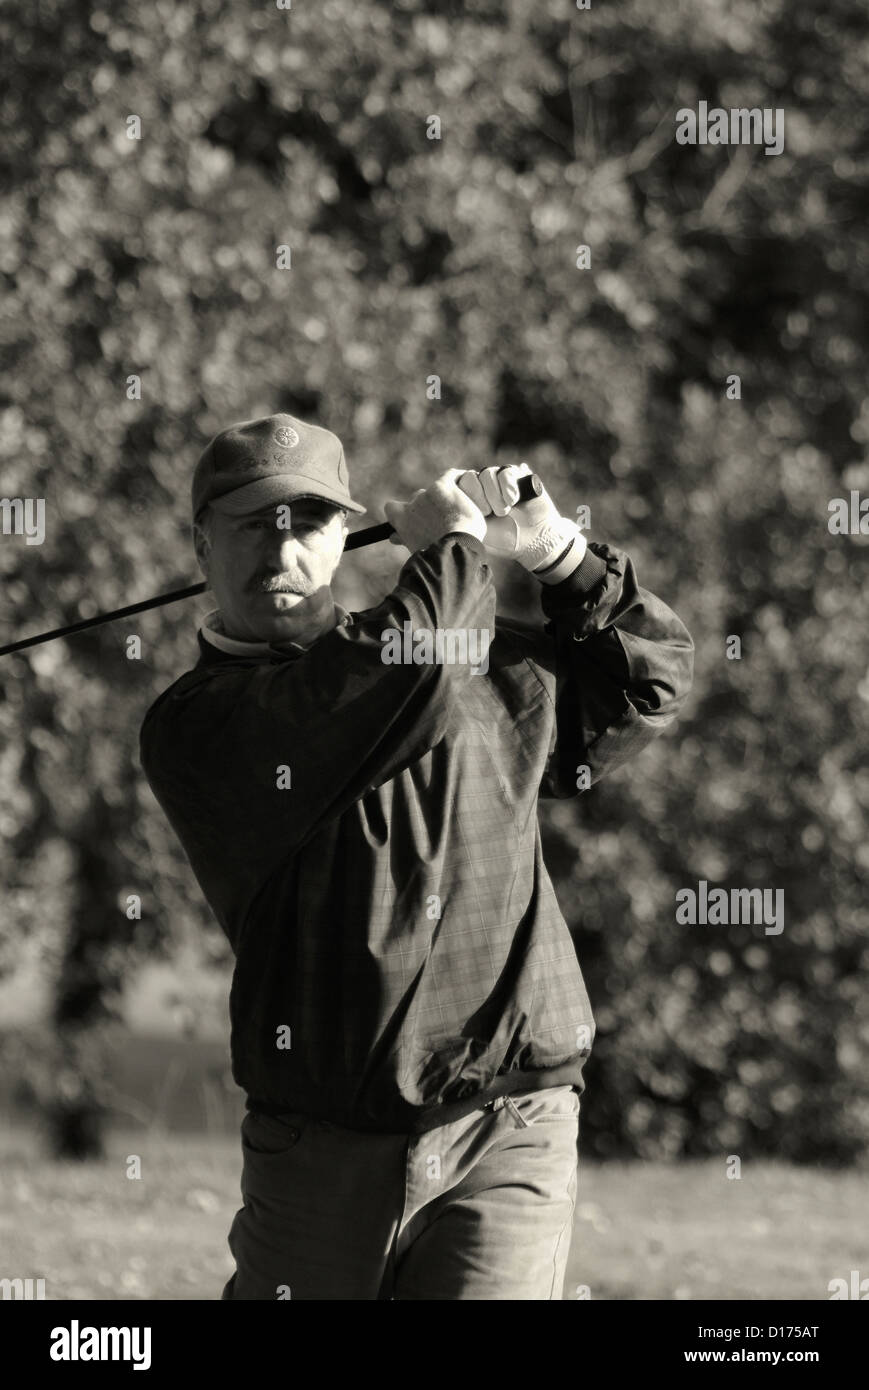 Italia, Roma Olgiata Golf Center, hombre jugando al golf Foto de stock